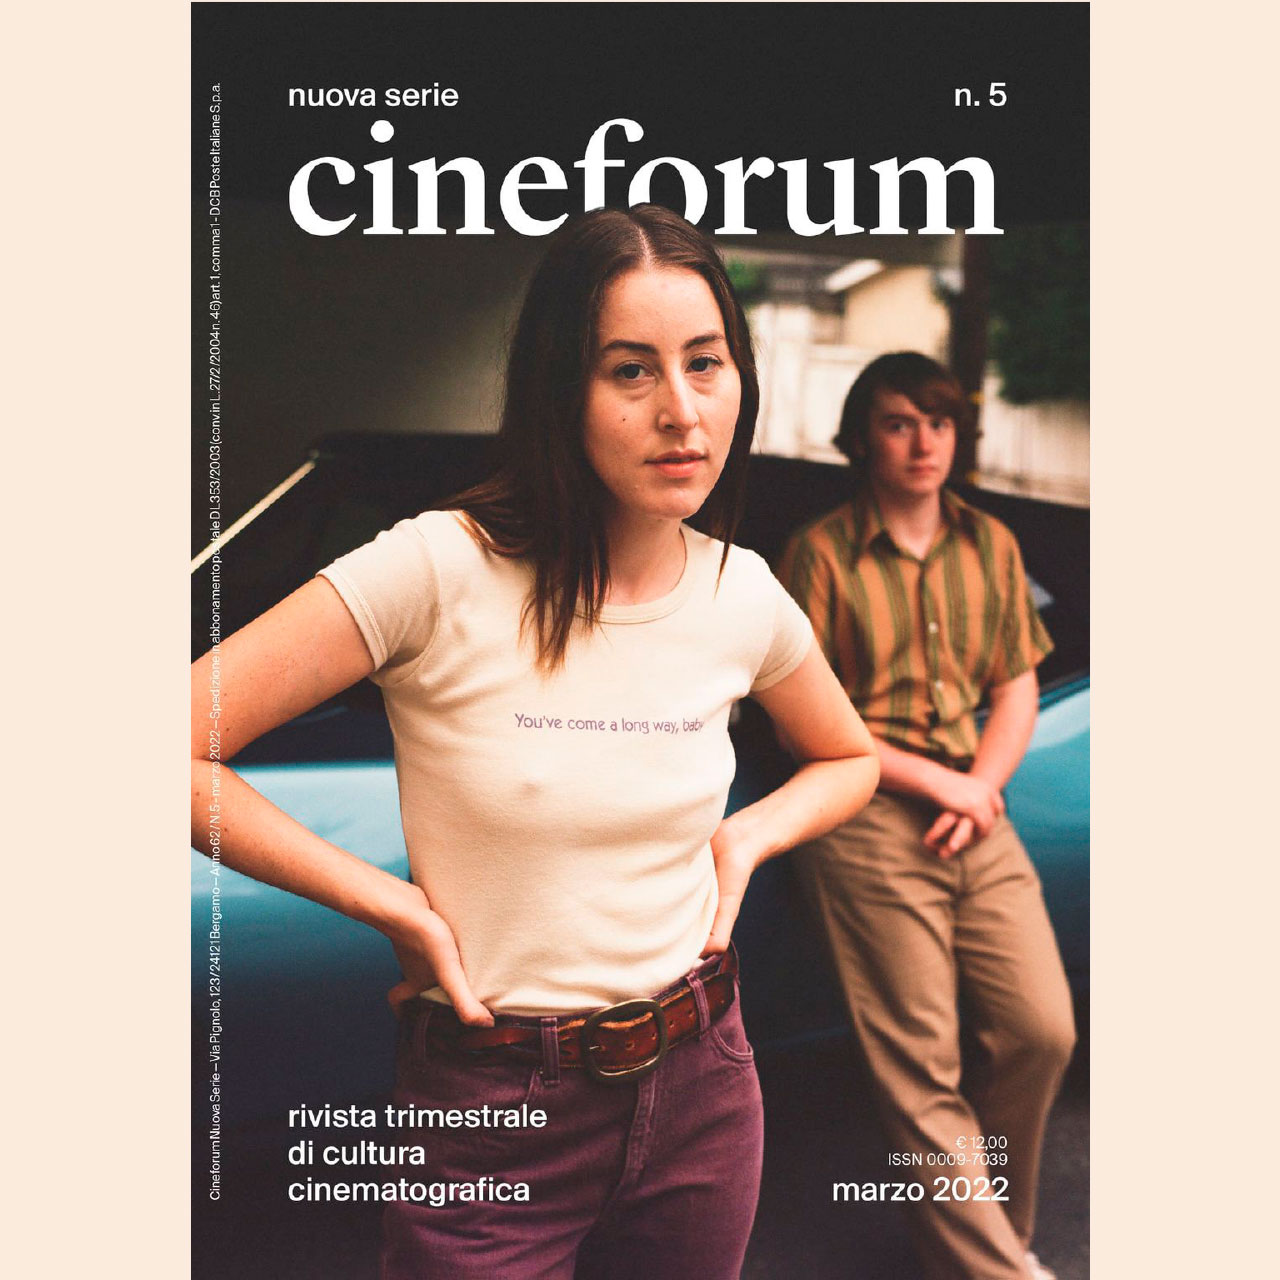 La nuova rivista “Cineforum”